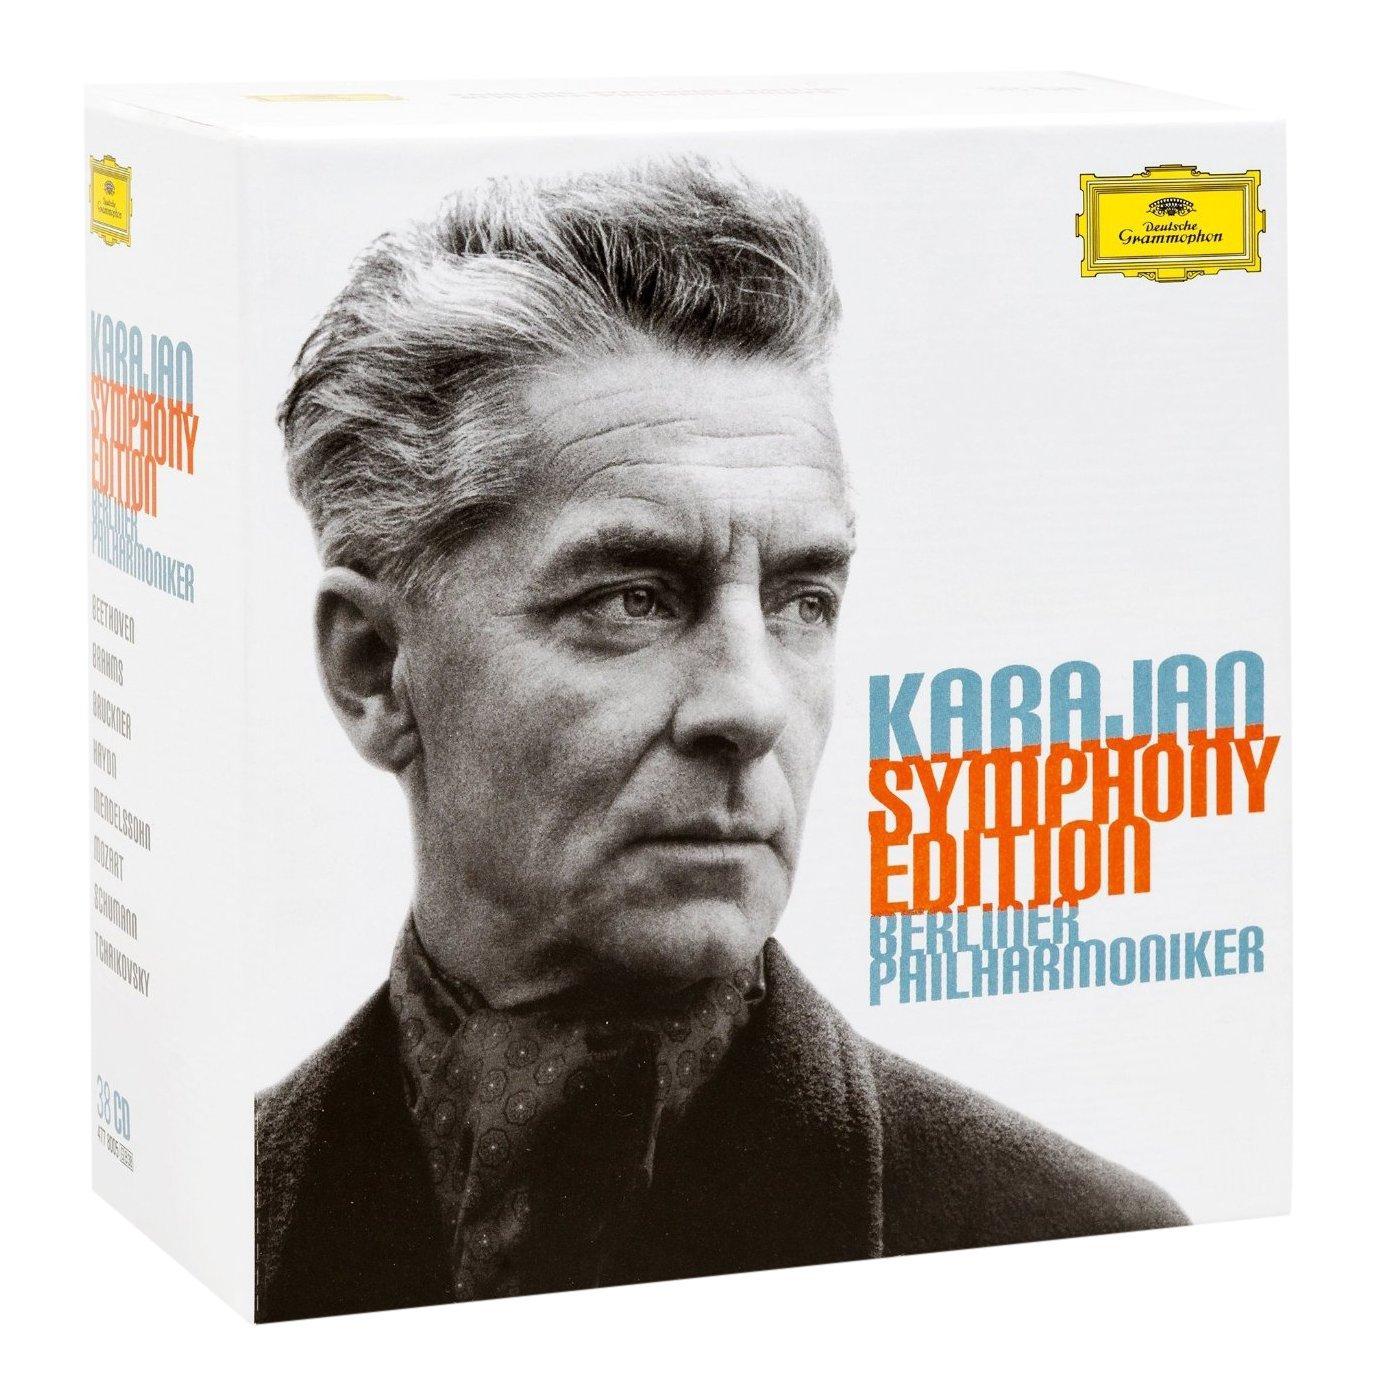 Karajan Symphony Edition 卡拉扬百年交响乐专辑 38cd                                                                                                                                                                                                    Box set